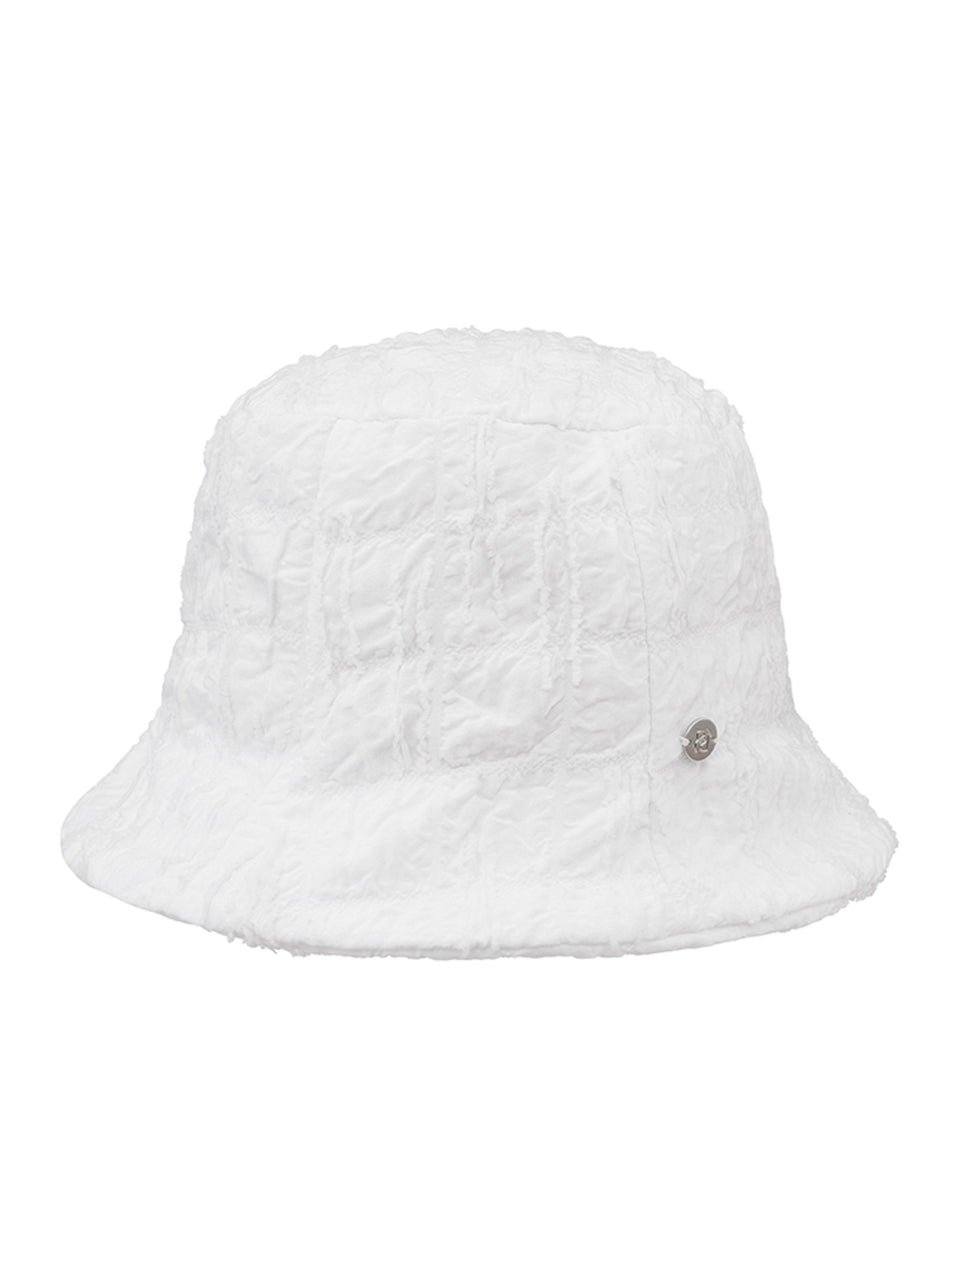 Jacquard Linkle Bucket Hat in White